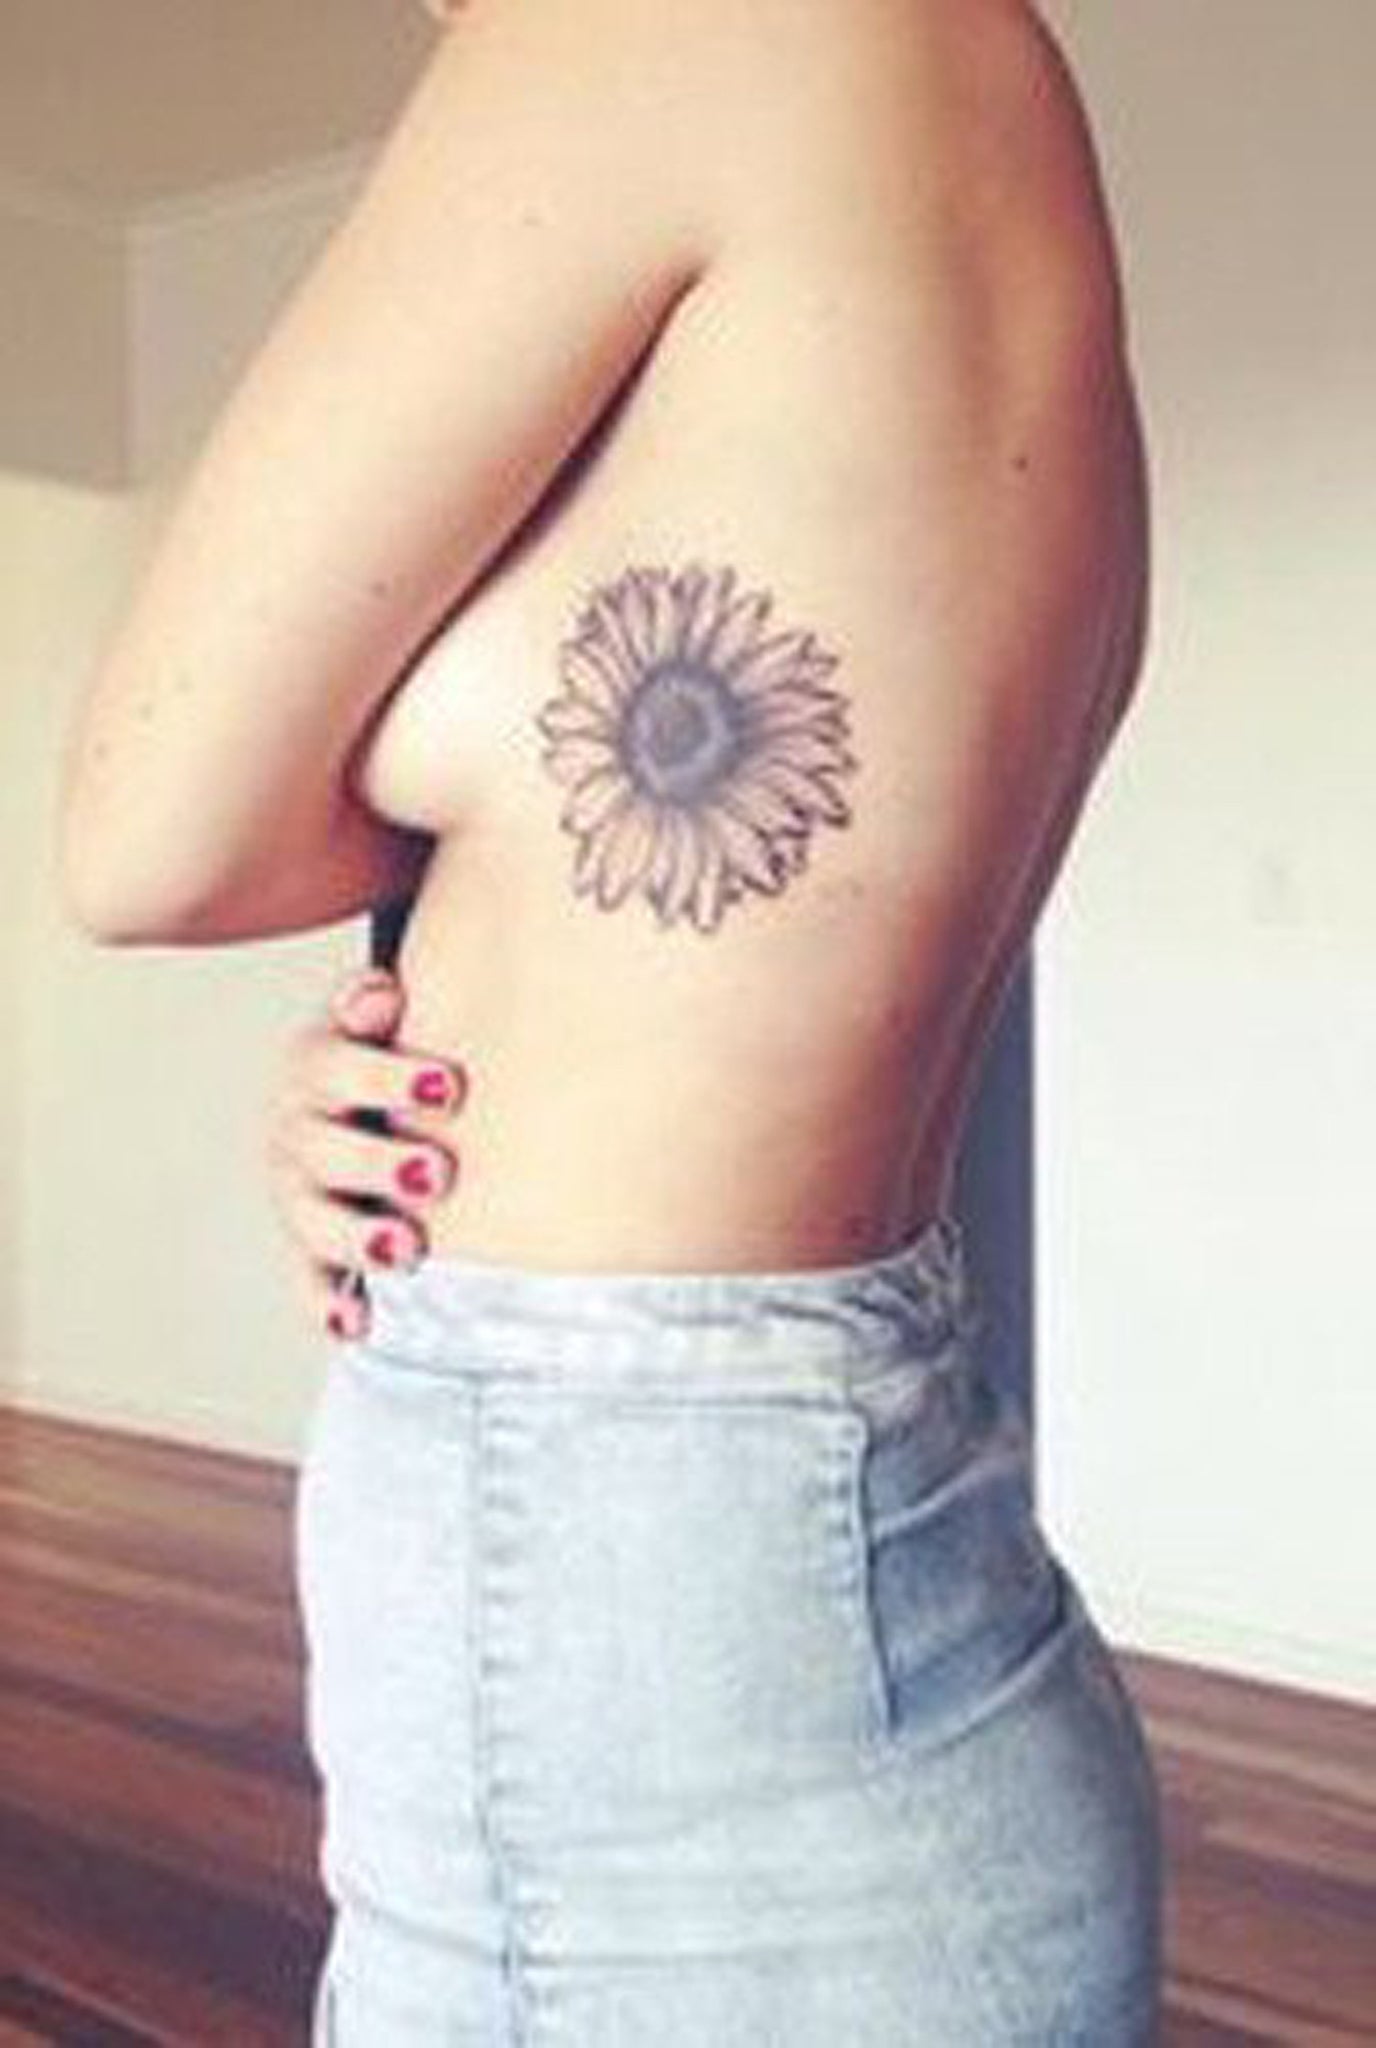 Rib Tattoo Ideas for Women - Sunflower Floral Tat at MyBodiArt.com 